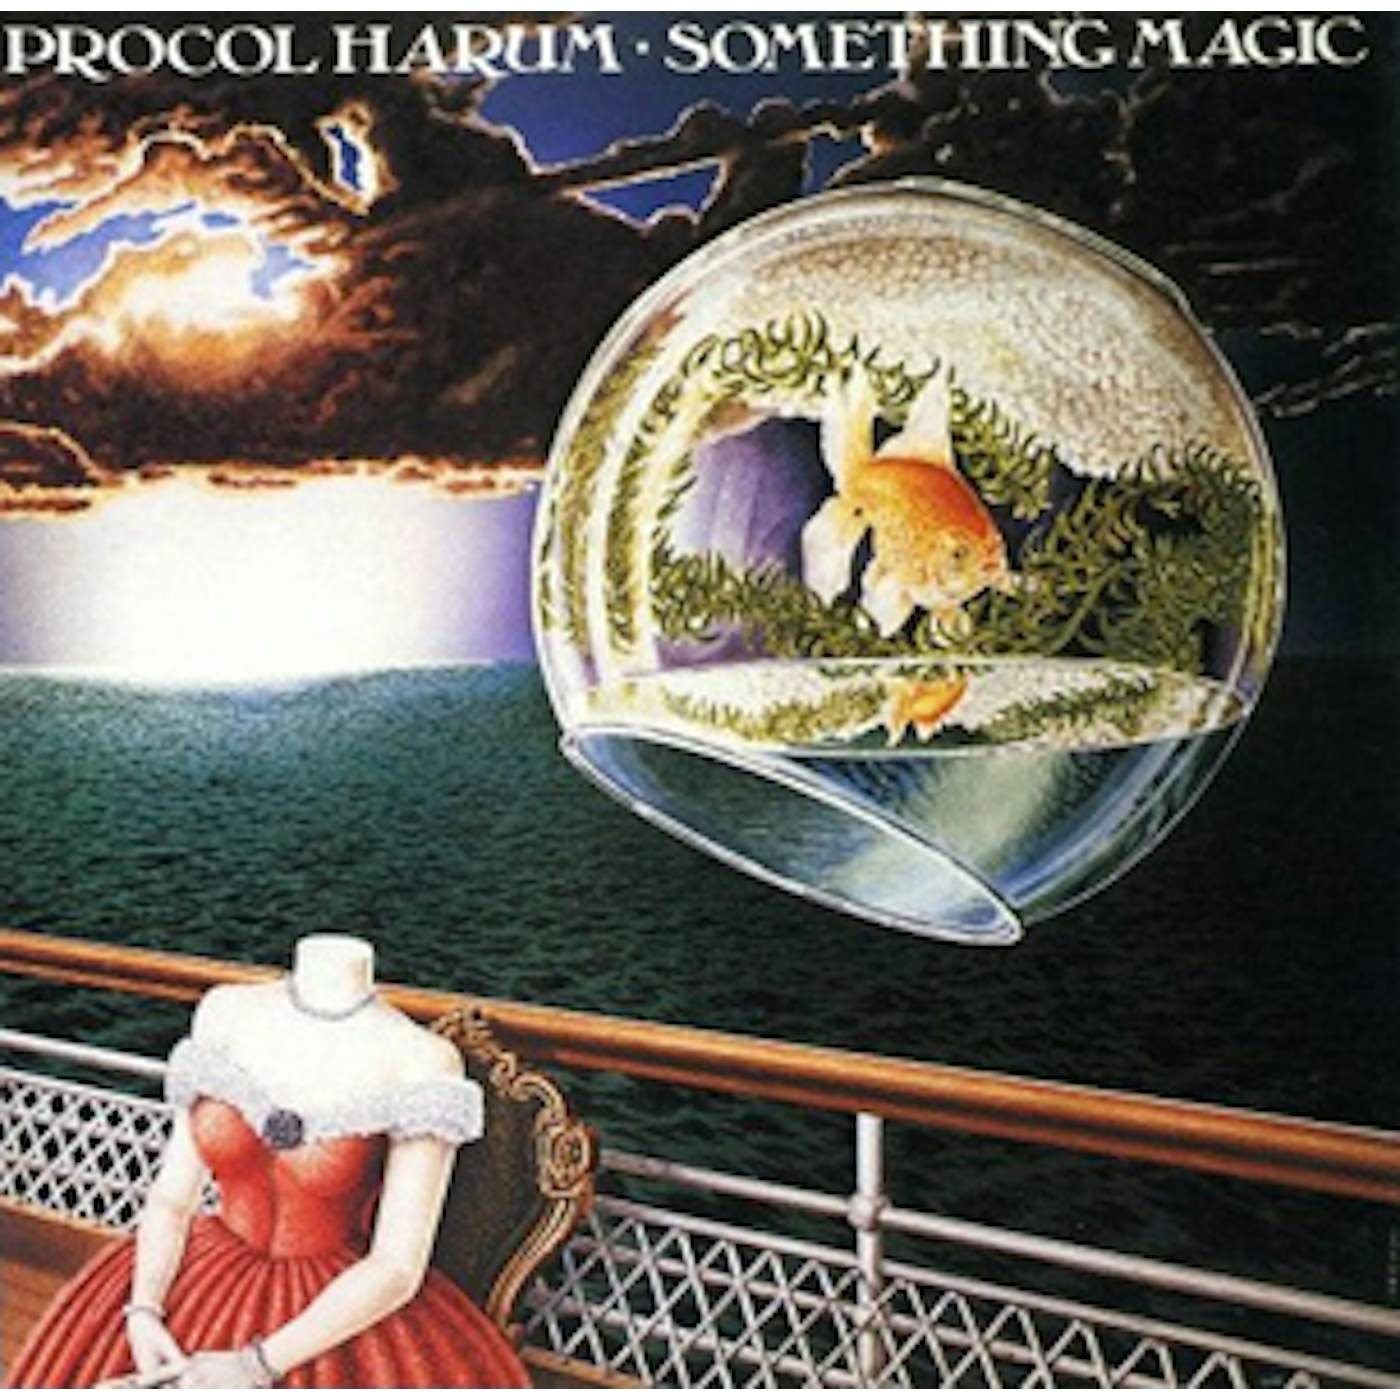 Procol Harum Something Magic Vinyl Record